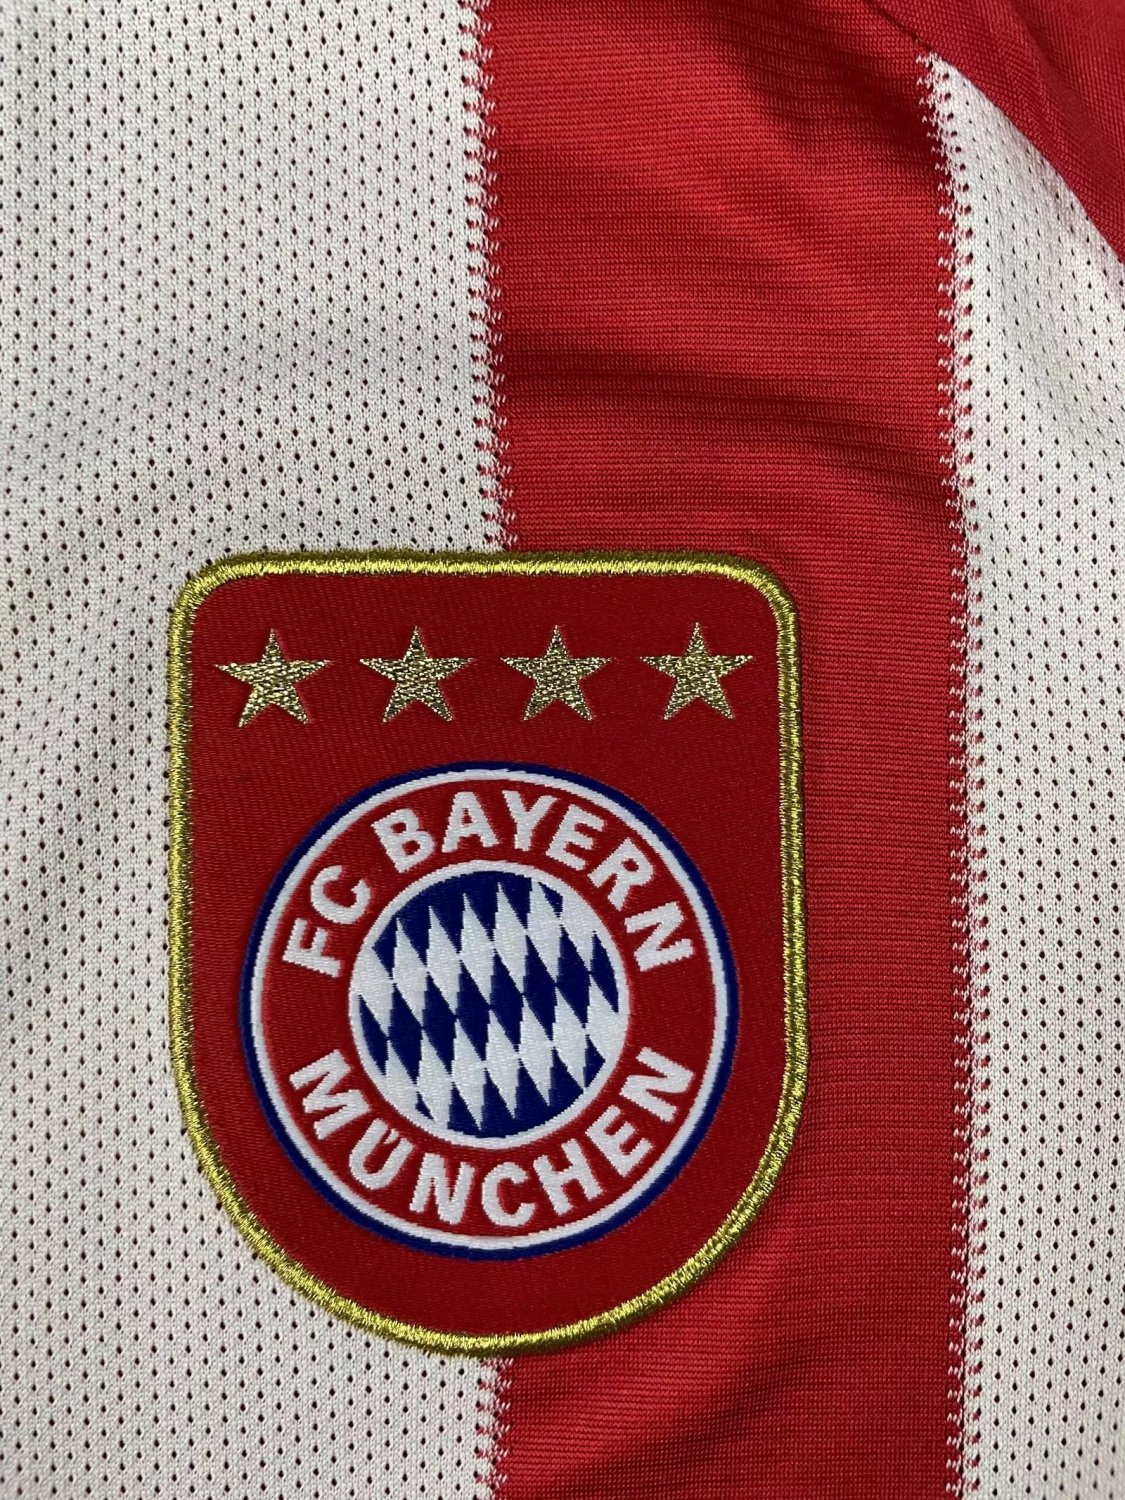 Bayern Munich Soccer Jersey Replica Retro Home Mens 2010